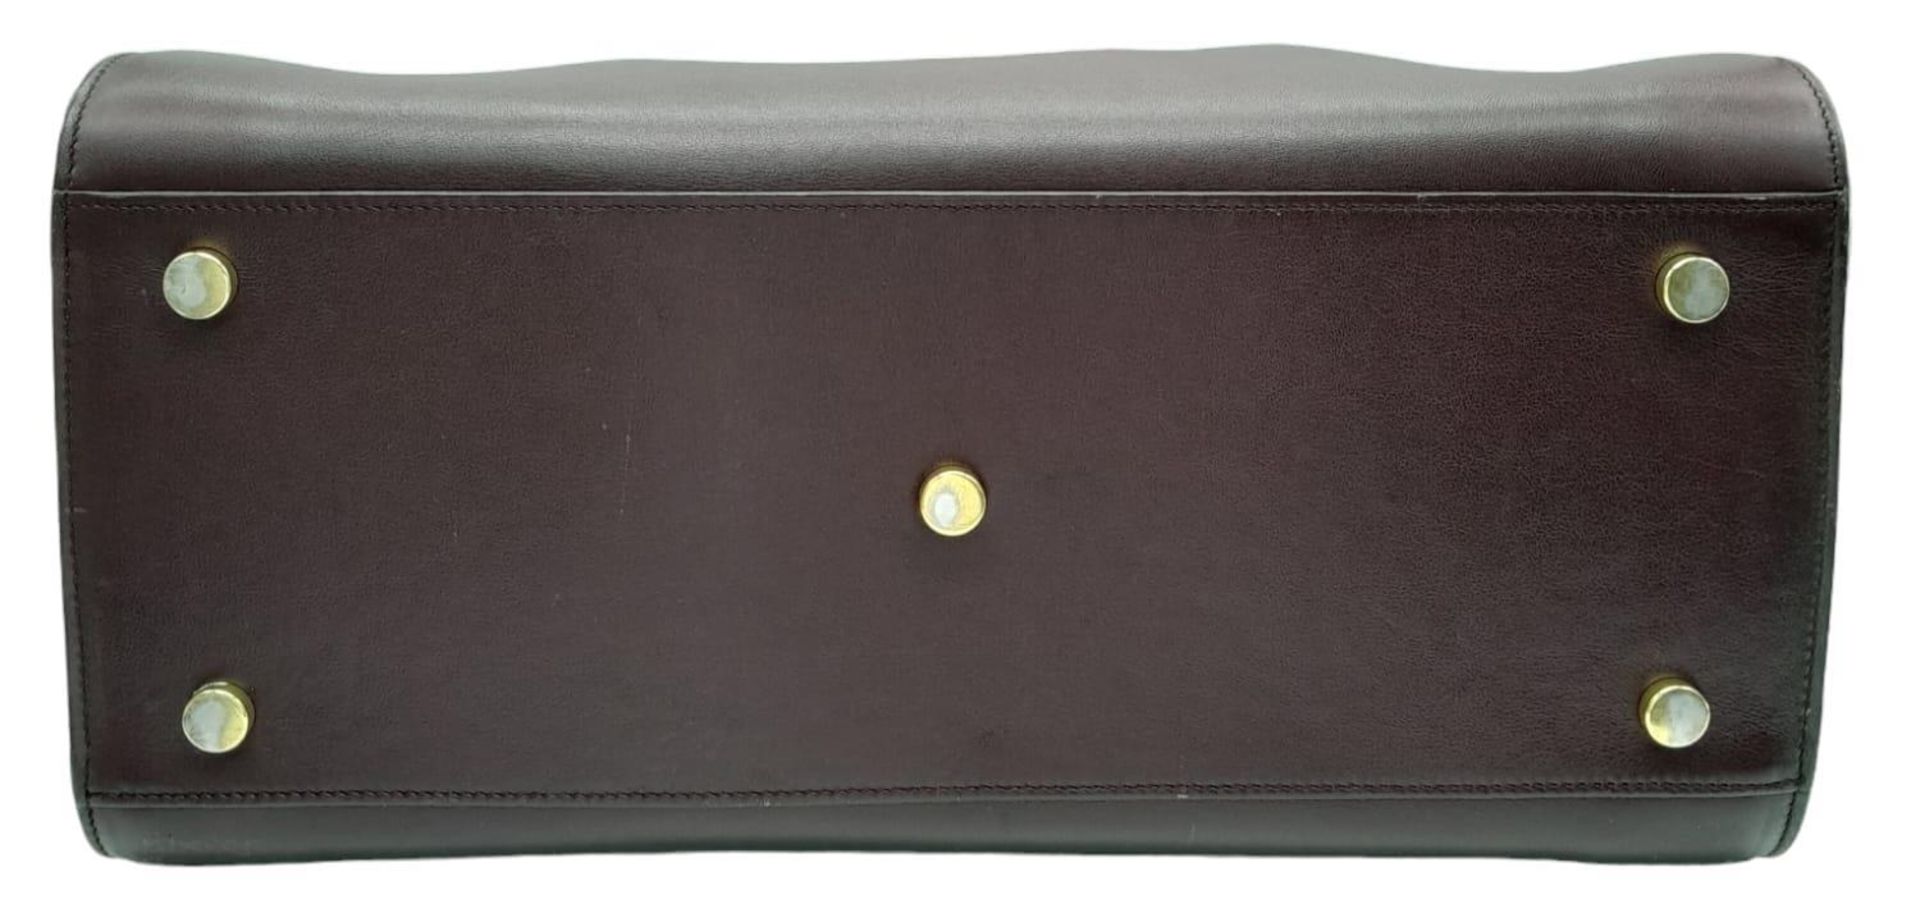 A Saint Laurent Sac De Jour Burgundy Handbag. Leather Exterior, Gold Tone Hardware, Double Handle in - Image 4 of 9